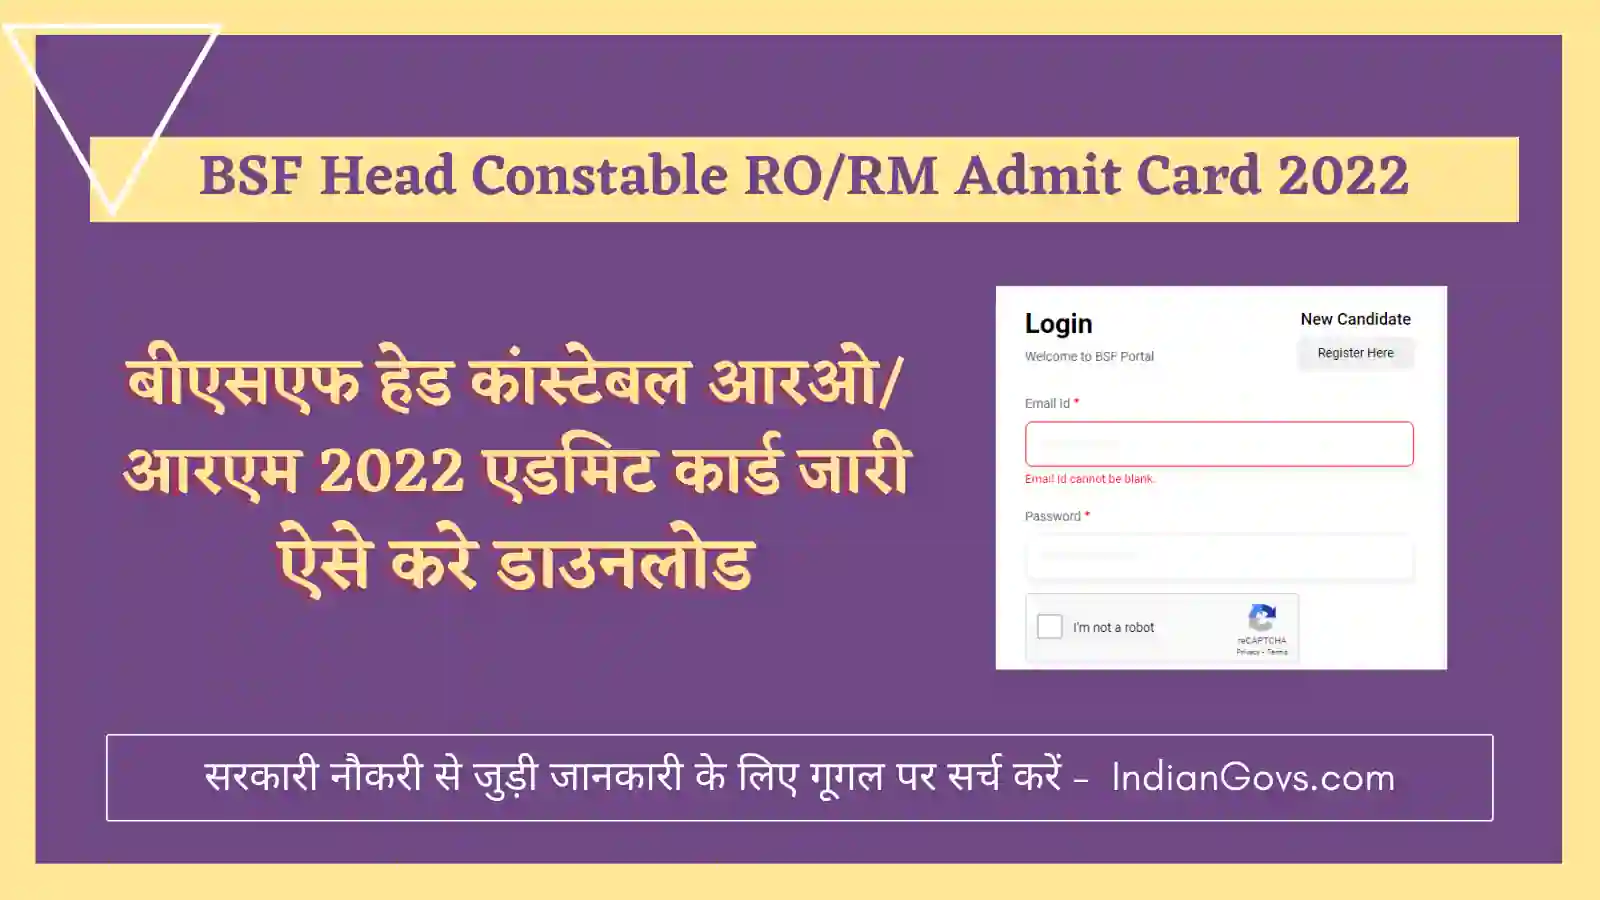 BSF Head Constable RO/RM Admit Card 2022